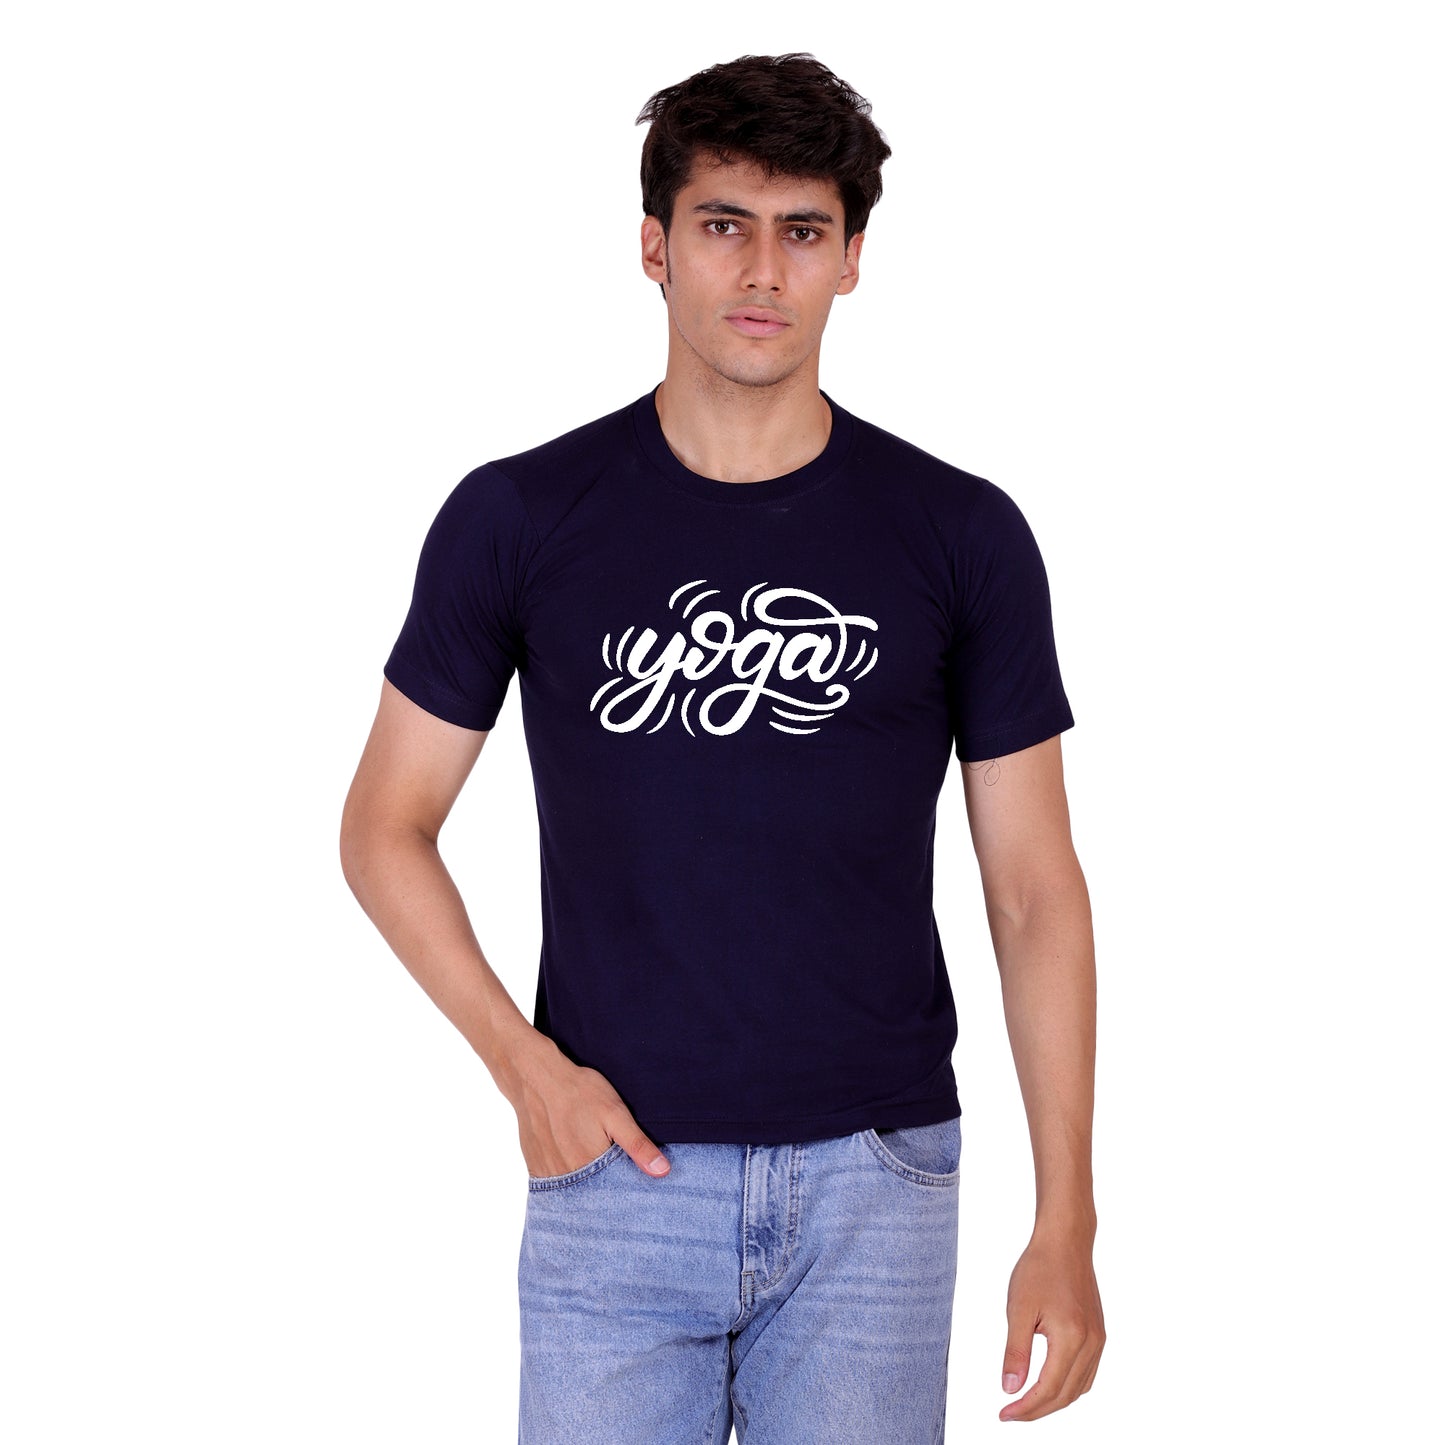 Yoga cotton T-shirt | T016